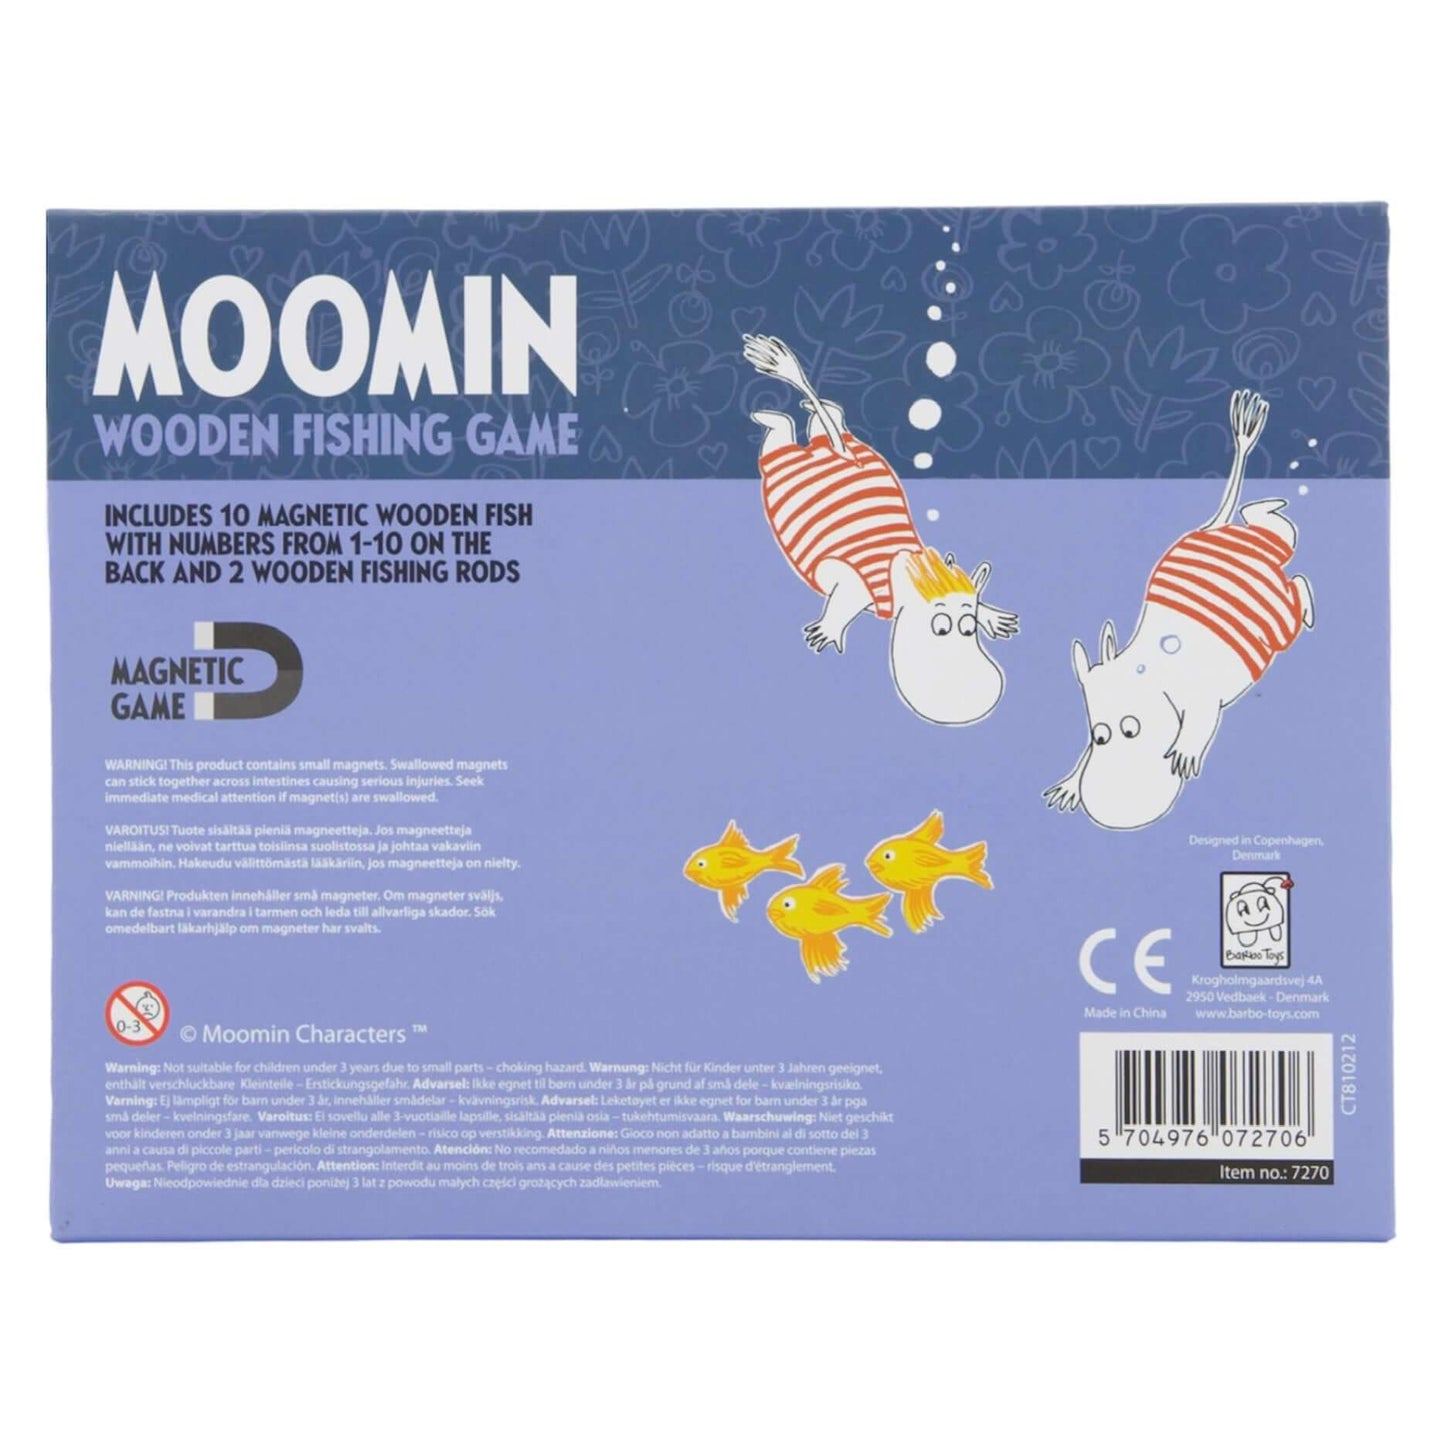 Moomin Wooden Fishing Game